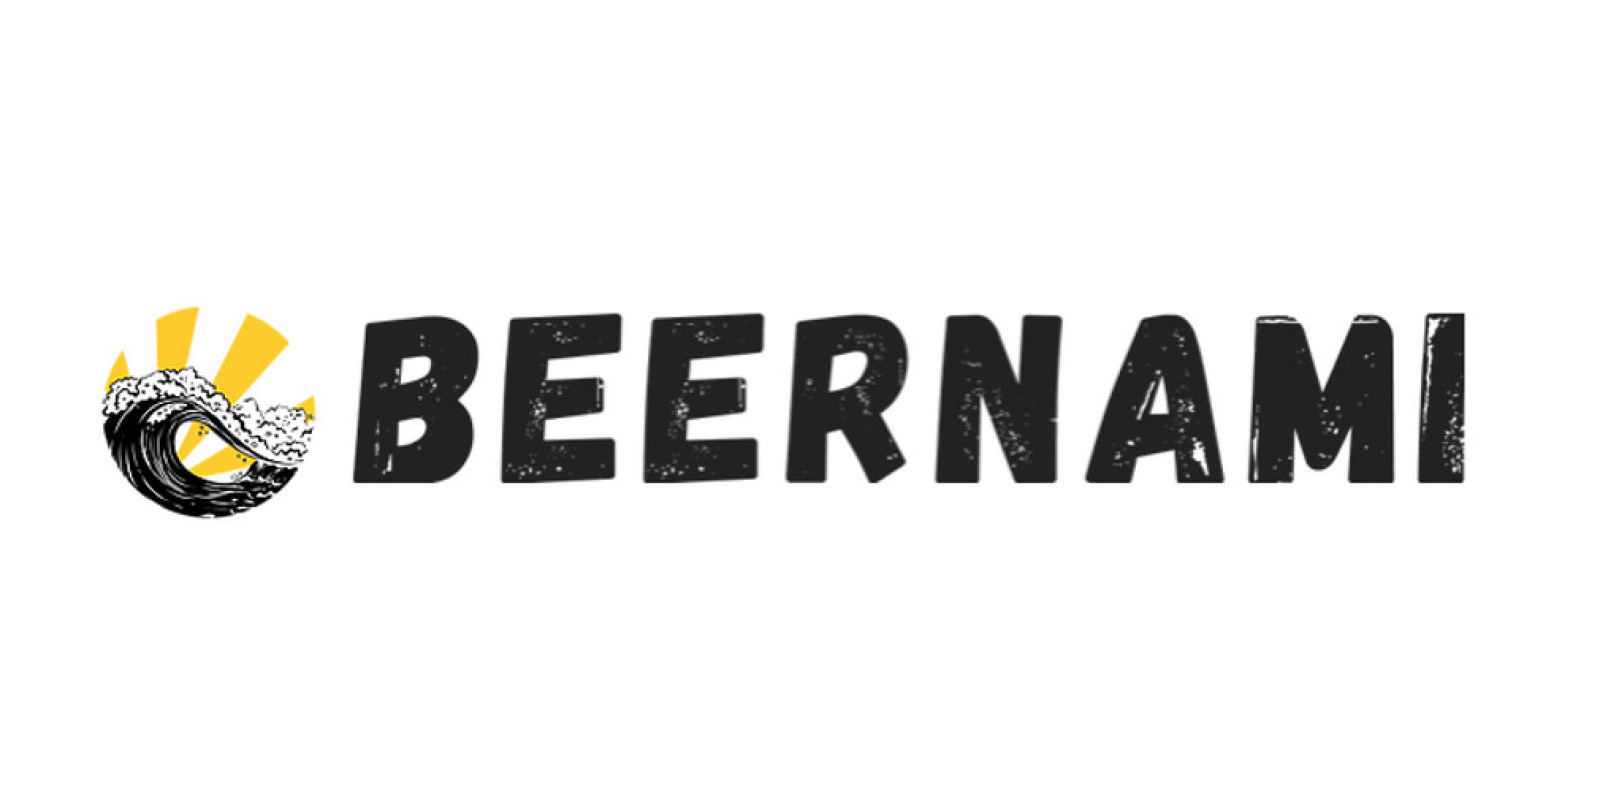 IF Craft Beer in Beernami beerbox wave 7